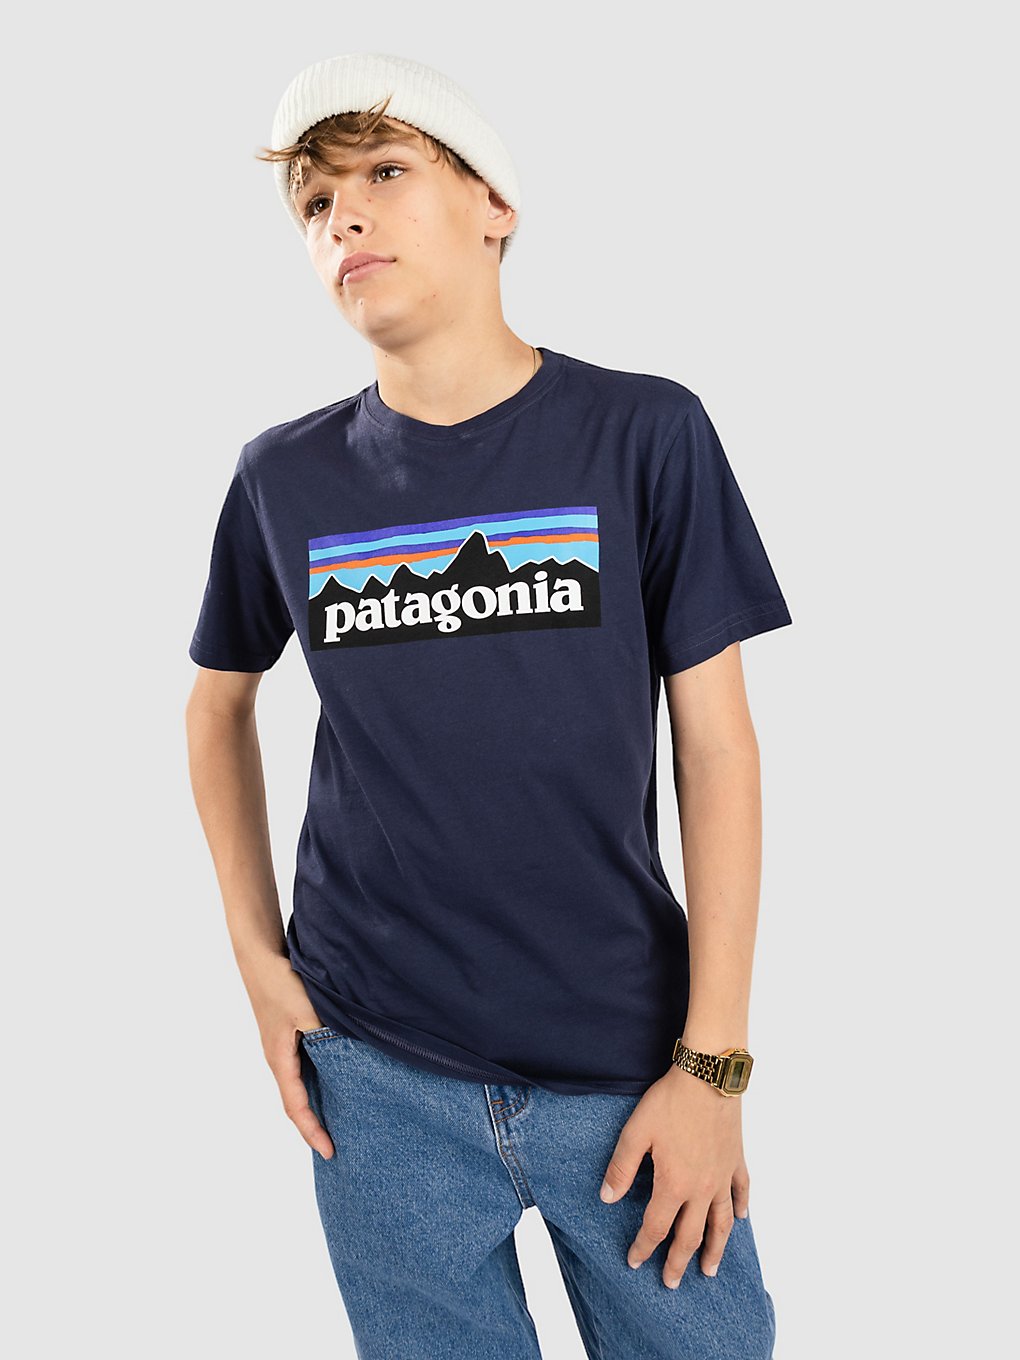 Patagonia Regenerative Organic Certified Cotton P- T-Shirt new navy kaufen